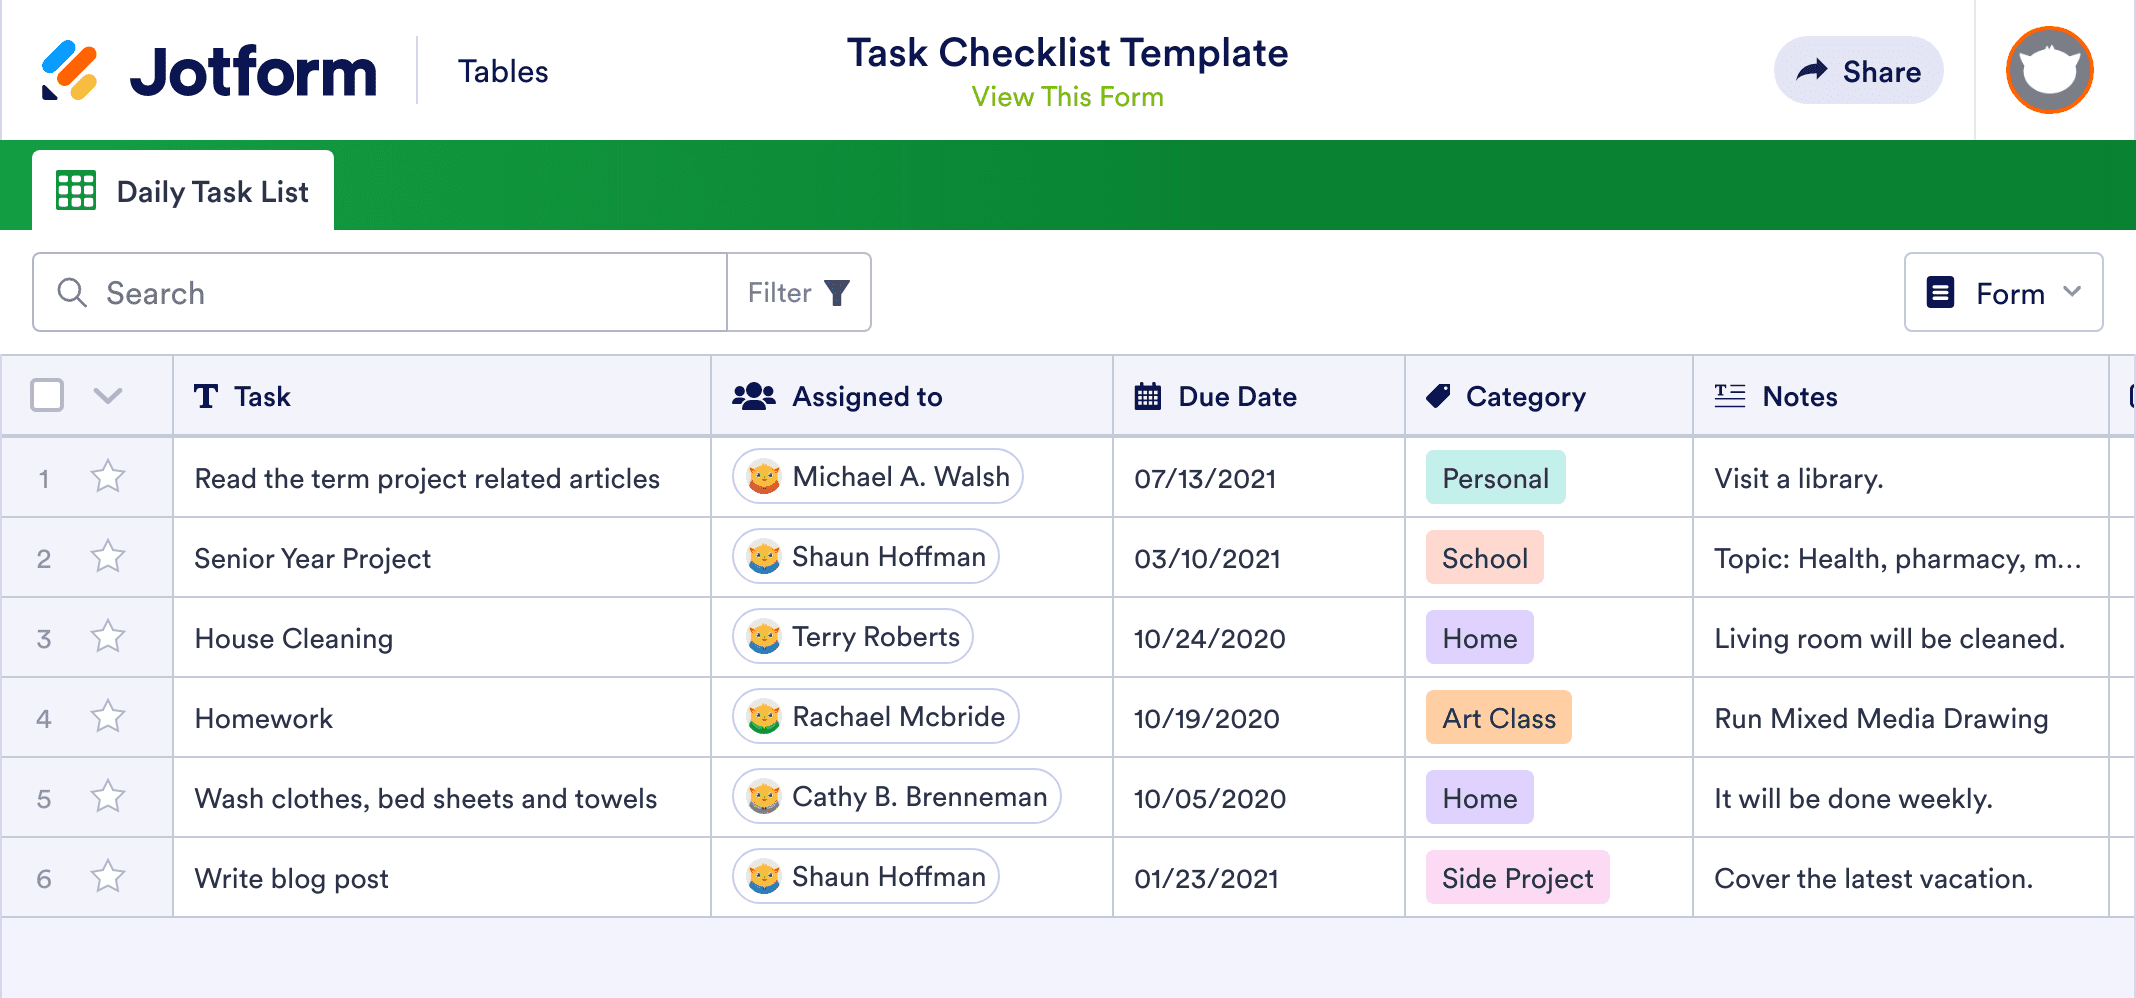 Task Checklist Template